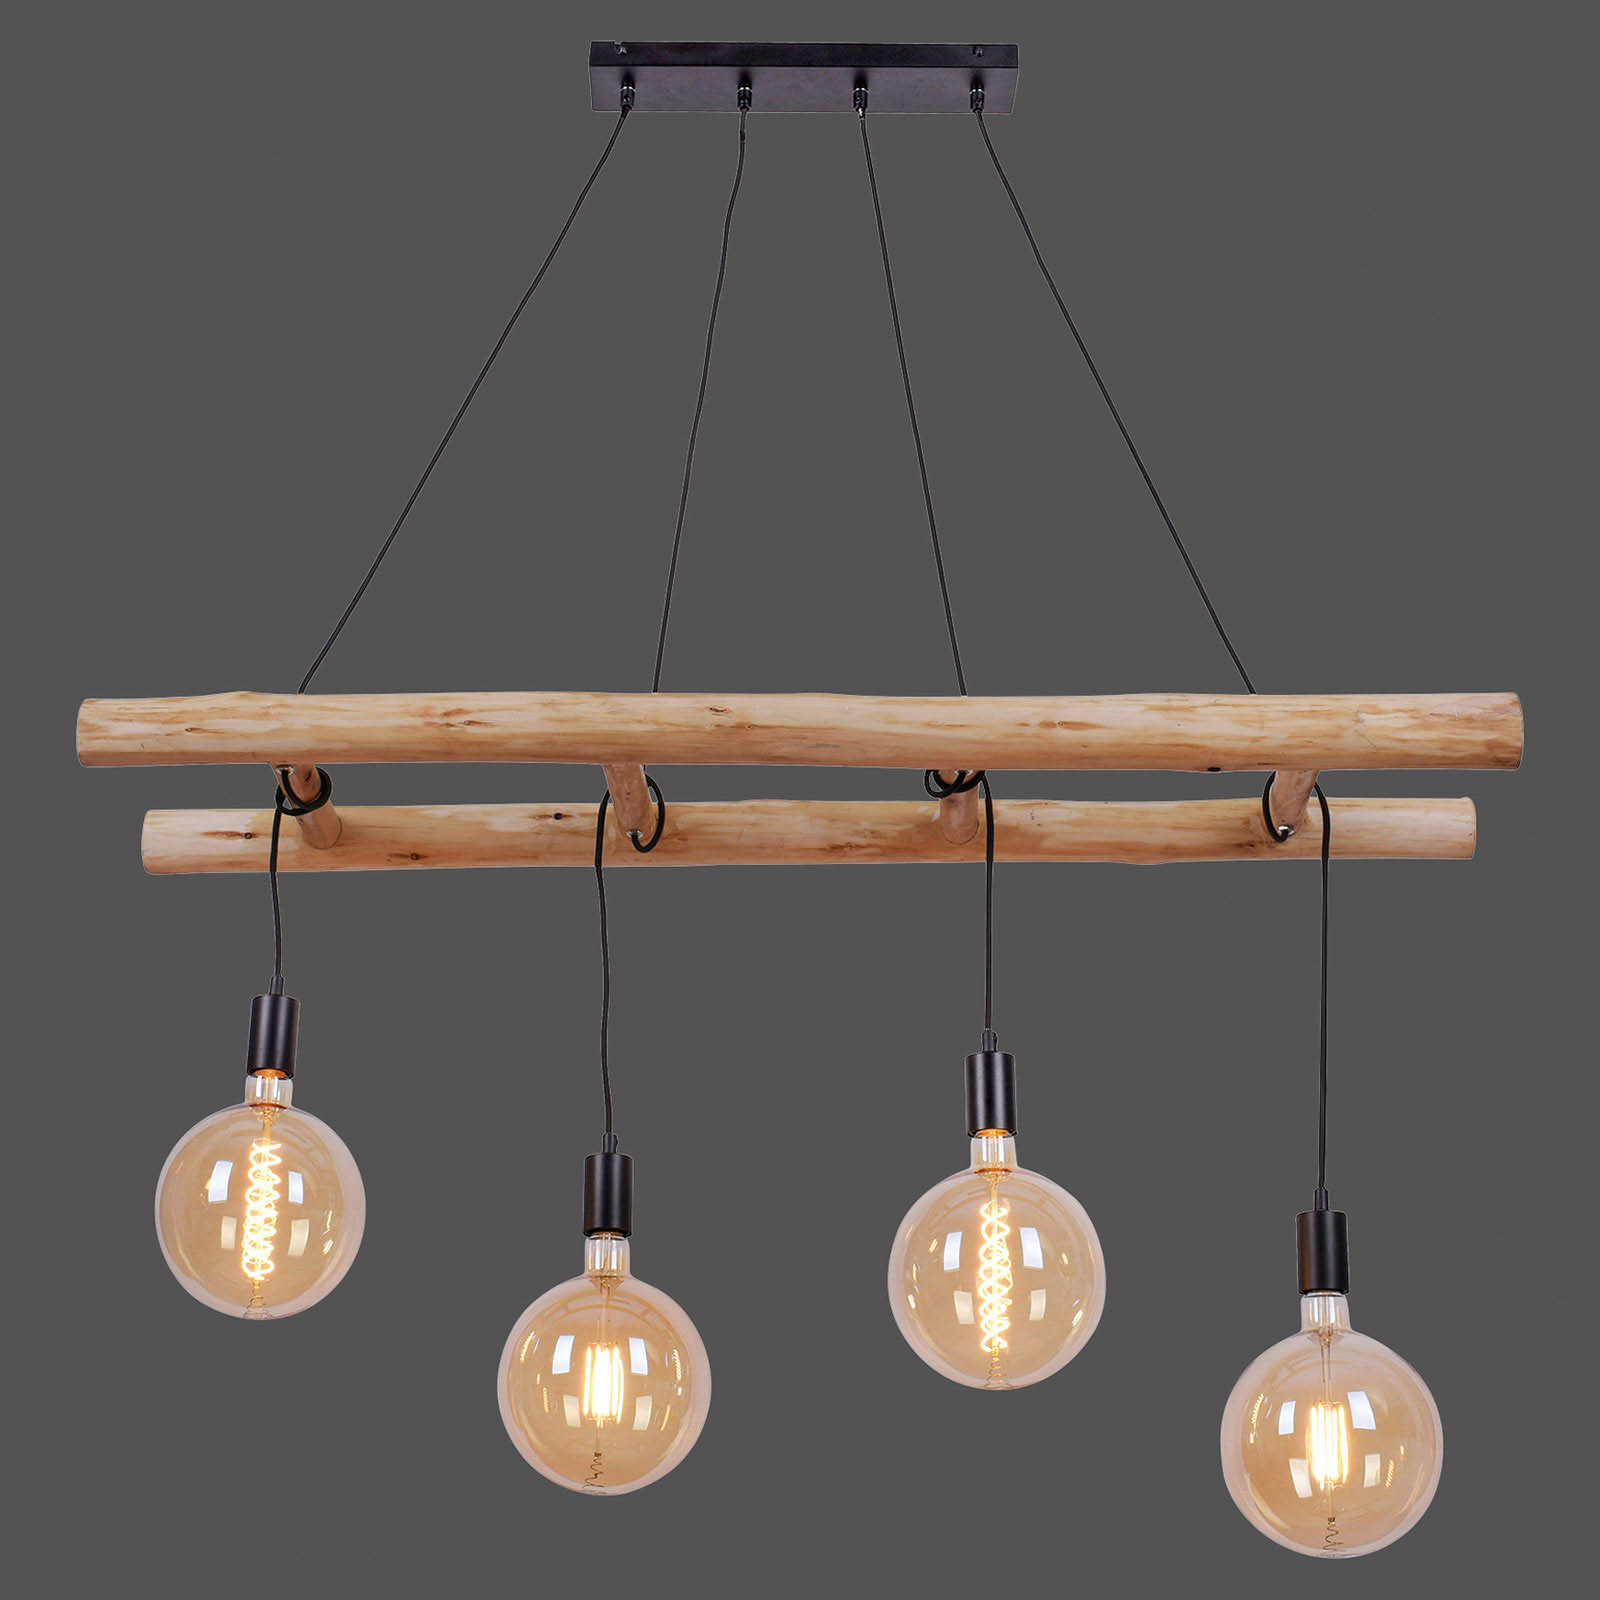 Edgar hanging light made of wood, four-bulb